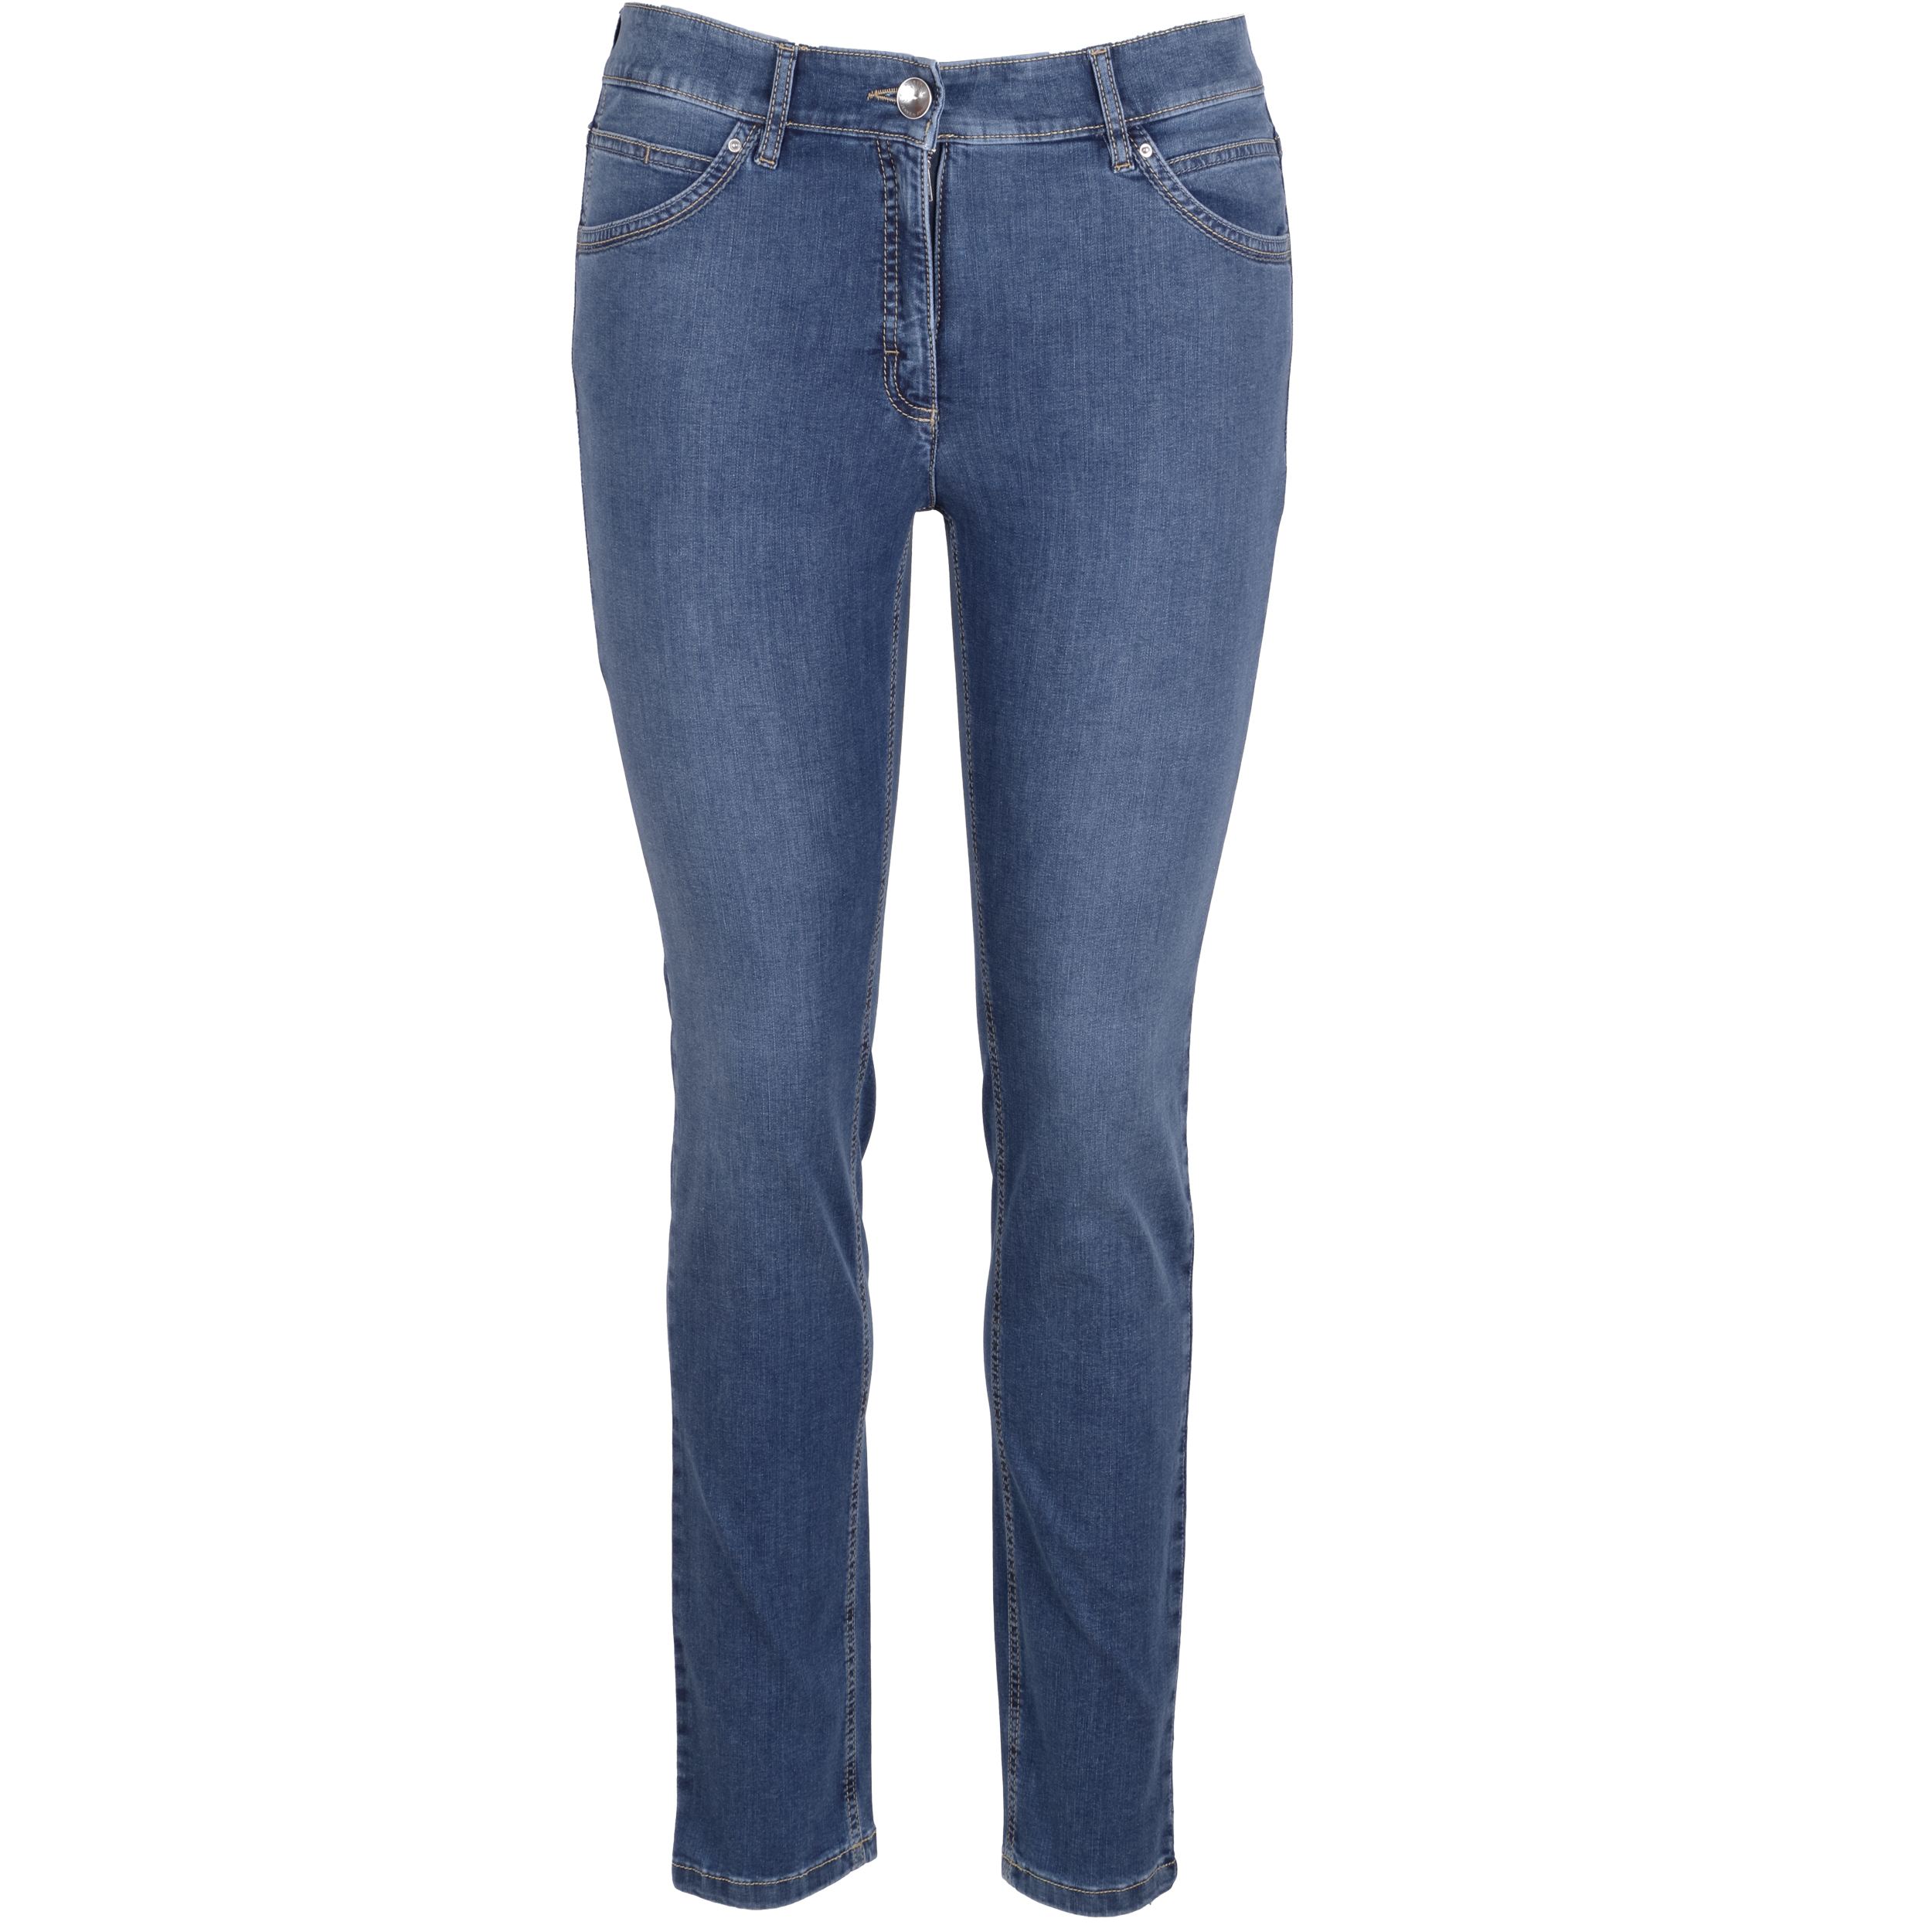 Zerres Damen Jeans Twigy Sensational  38 blau